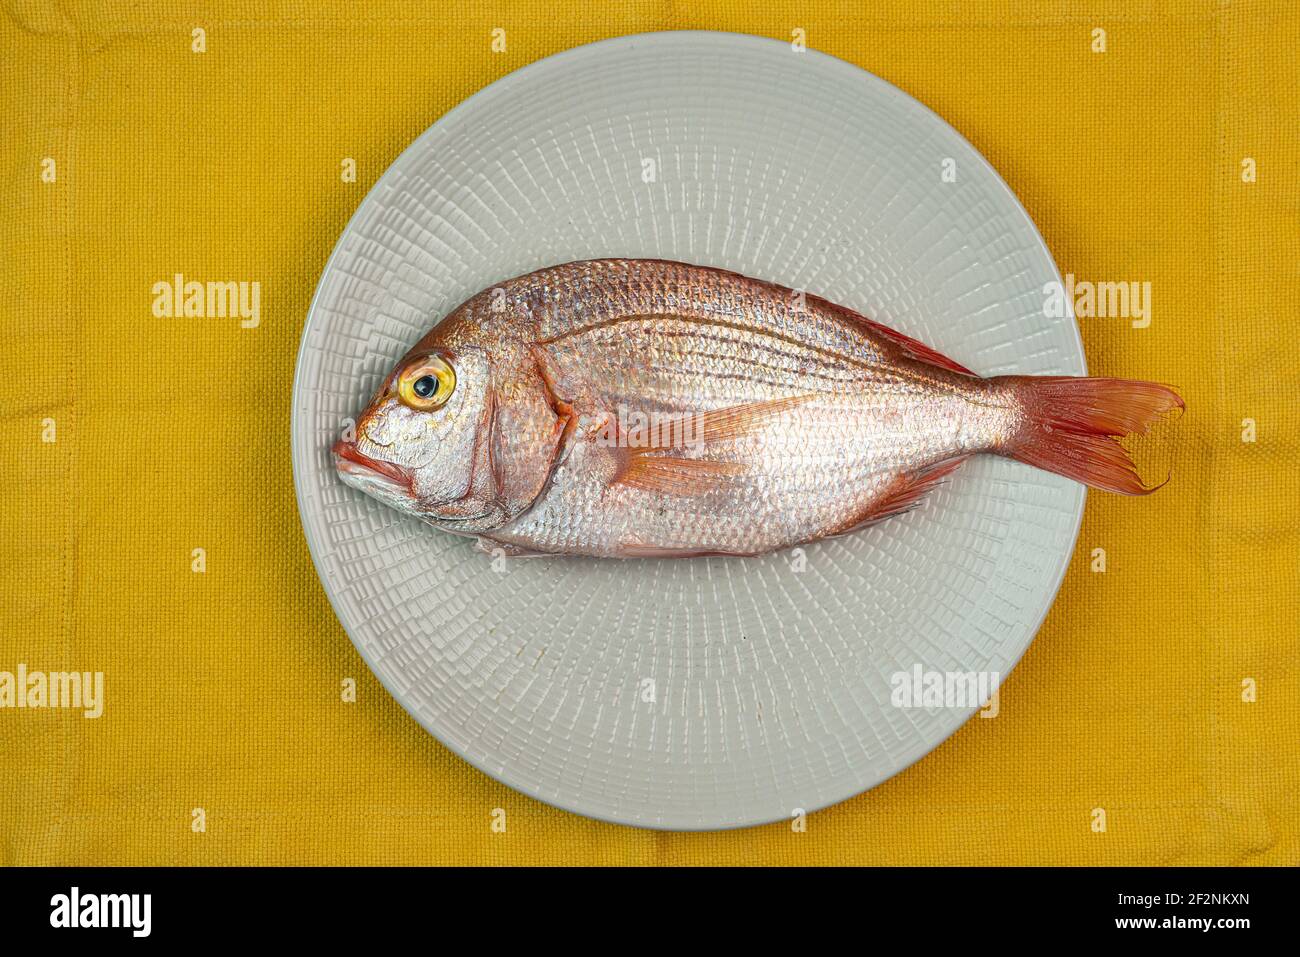 The red snapper fish (Dentex dentex) in the dish Stock Photo